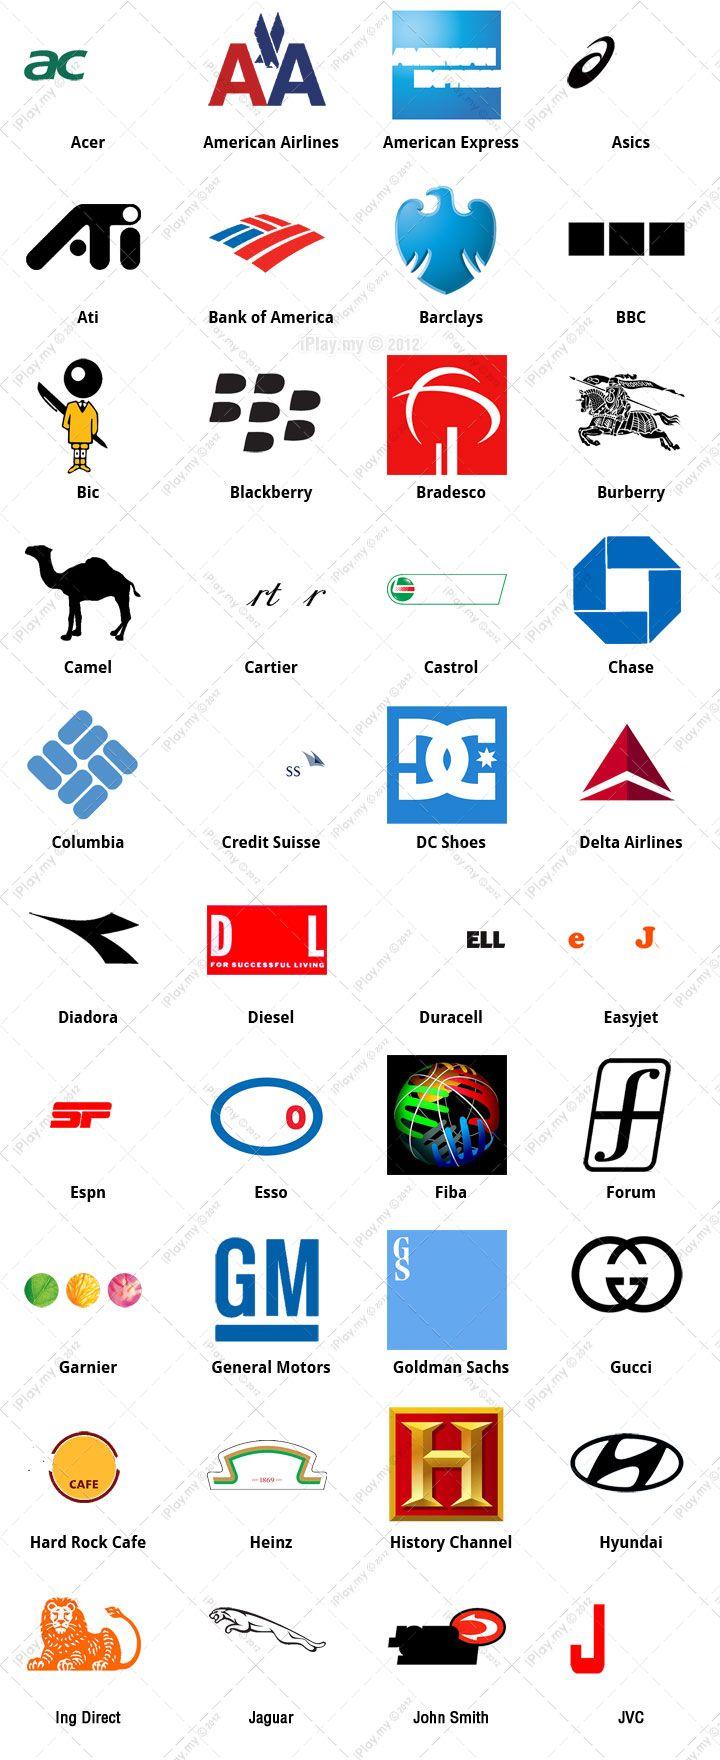 Answers.com Logo - Logos Quiz AticoD Games Answers | iPlay.my